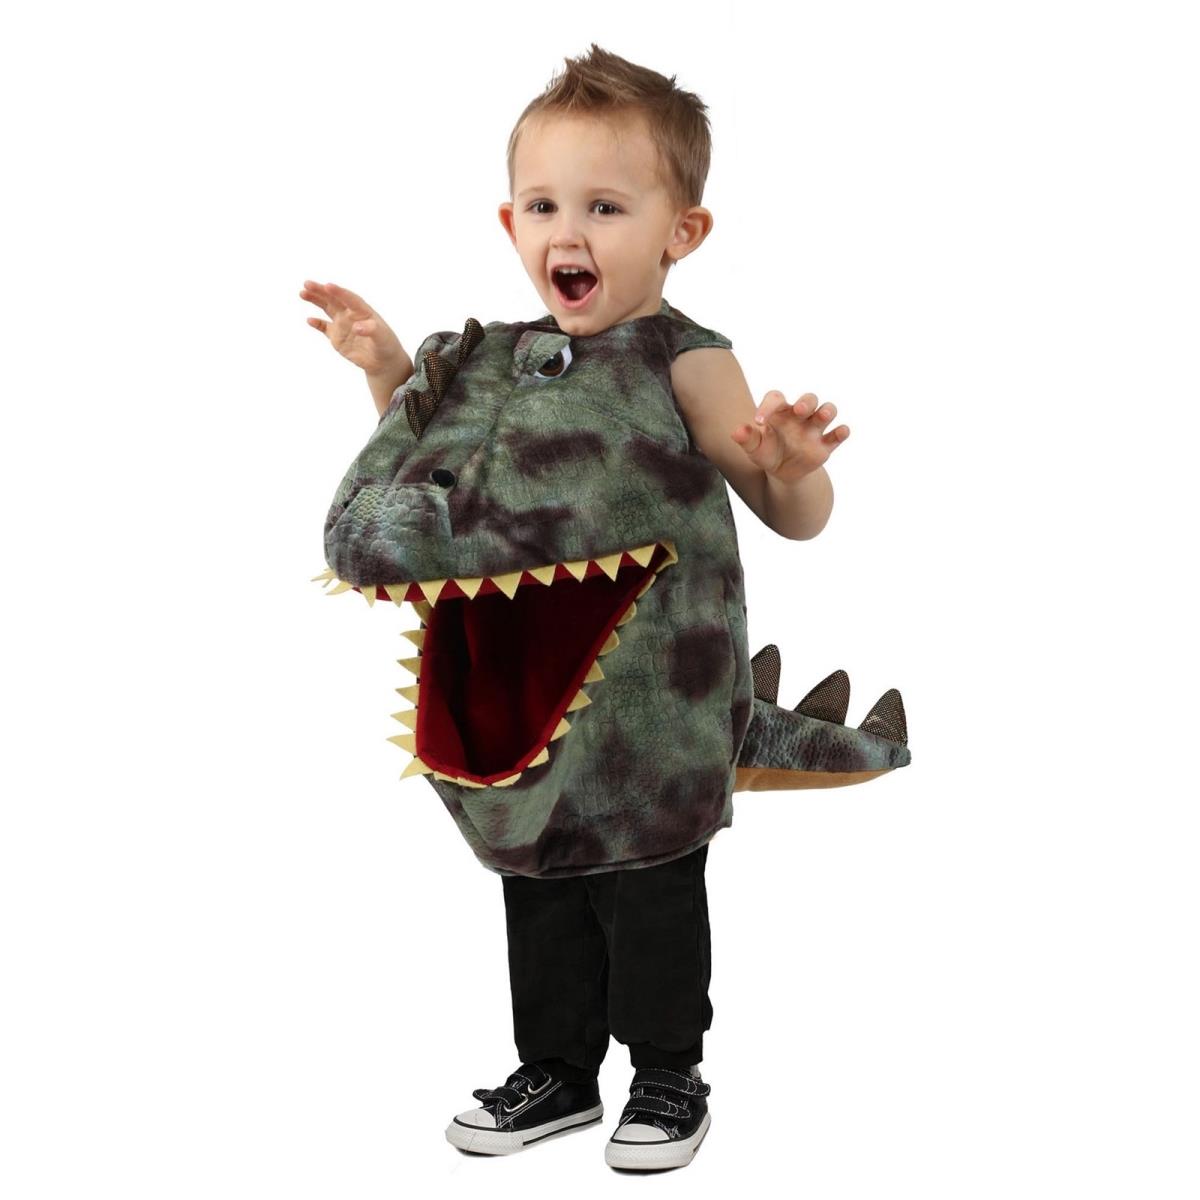 407703 Child Feed Me Dino Child Costume - Medium & Large